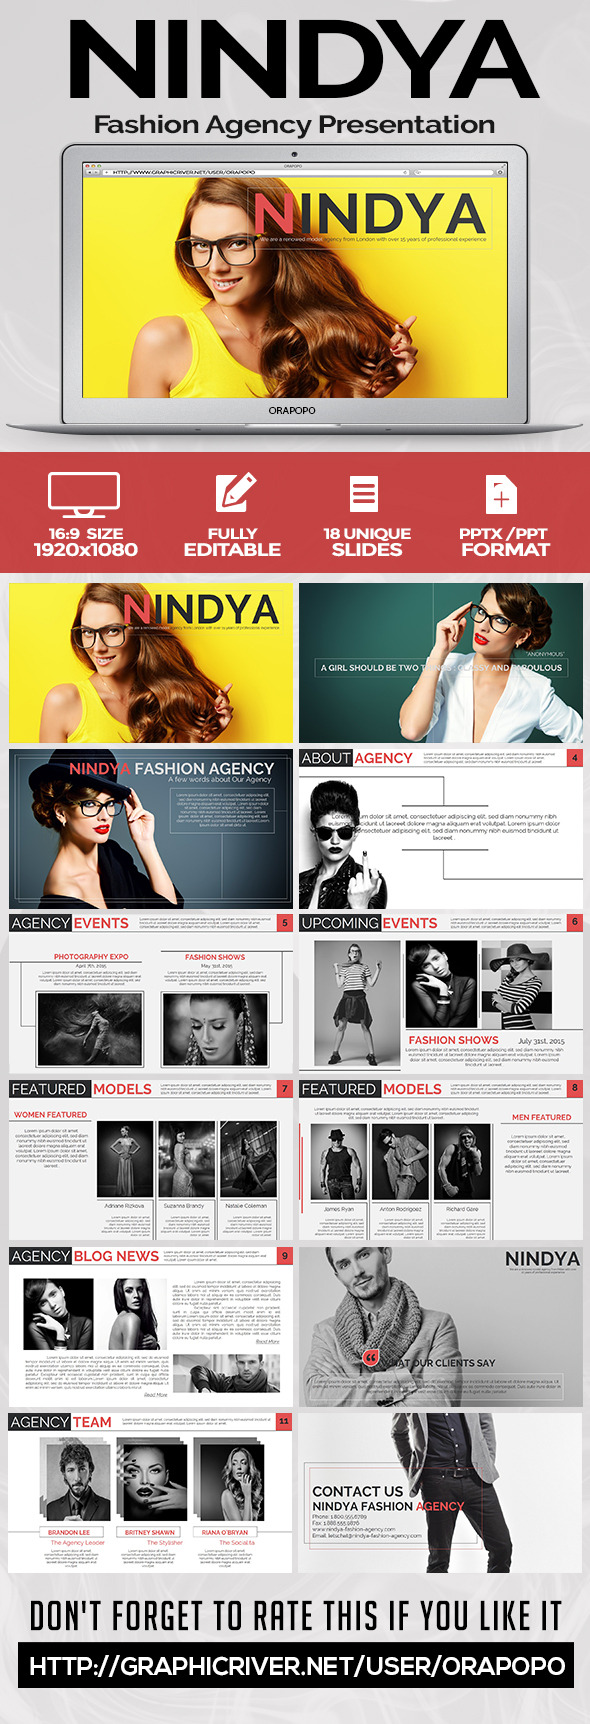 Nindya Fashion Agency Presentation